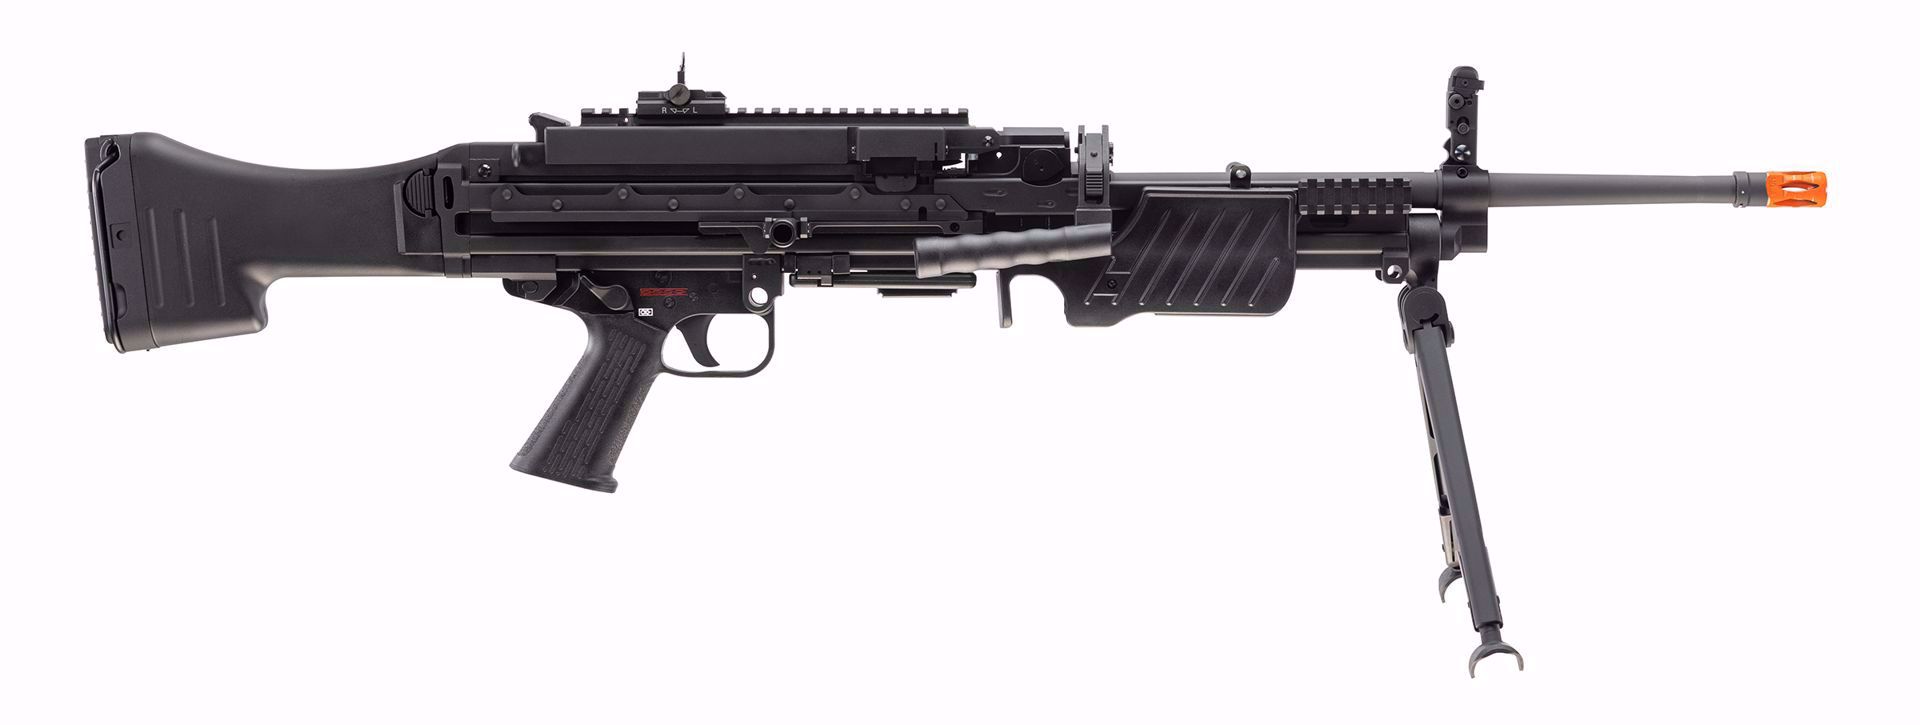 Hk Mg4 Airsoft Aeg High Capacity Rifle 6mm Elite Force Airsoft